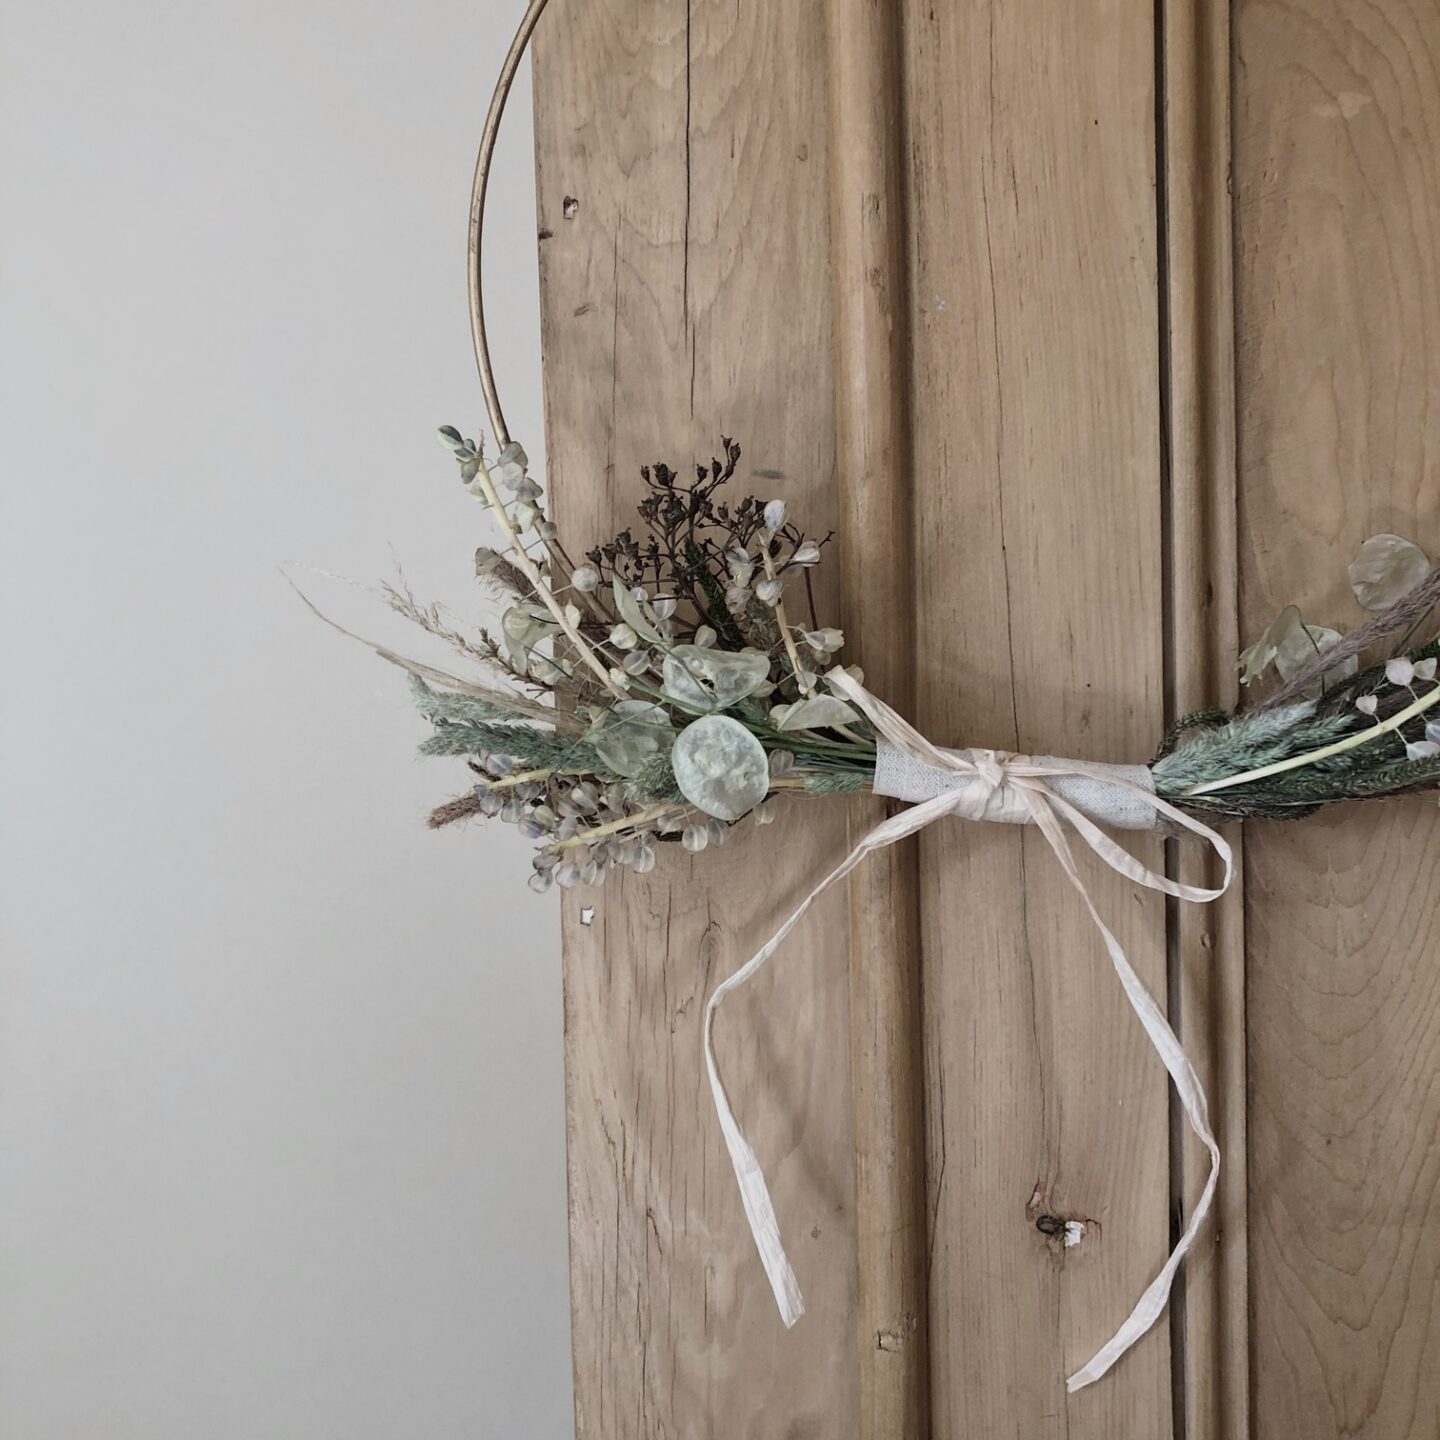 Dried flower wreath hanging against cupboard